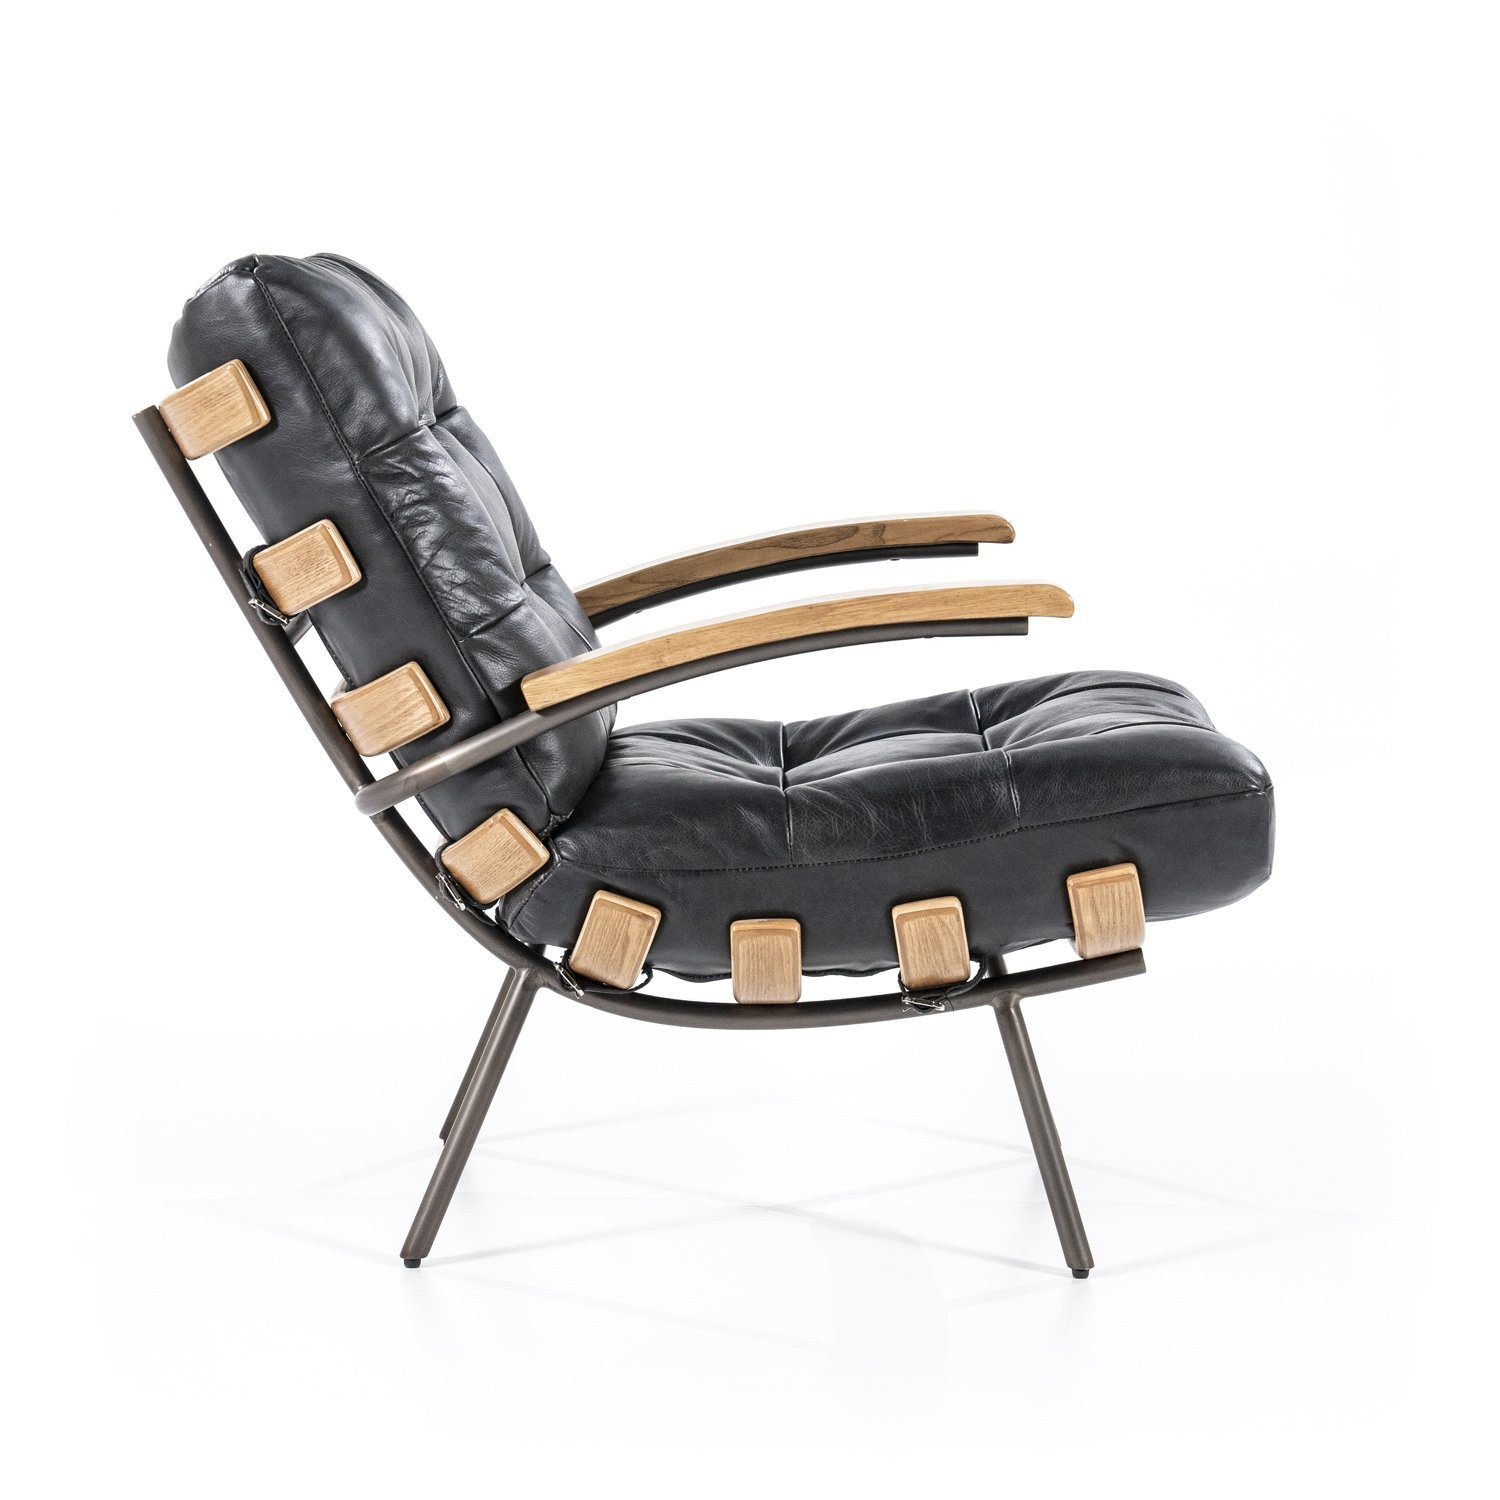 Sessel hochwertigem Maison NICOLAS Ledersessel Loungesessel Leder Vintage, schwarz Java-Leder aus ESTO